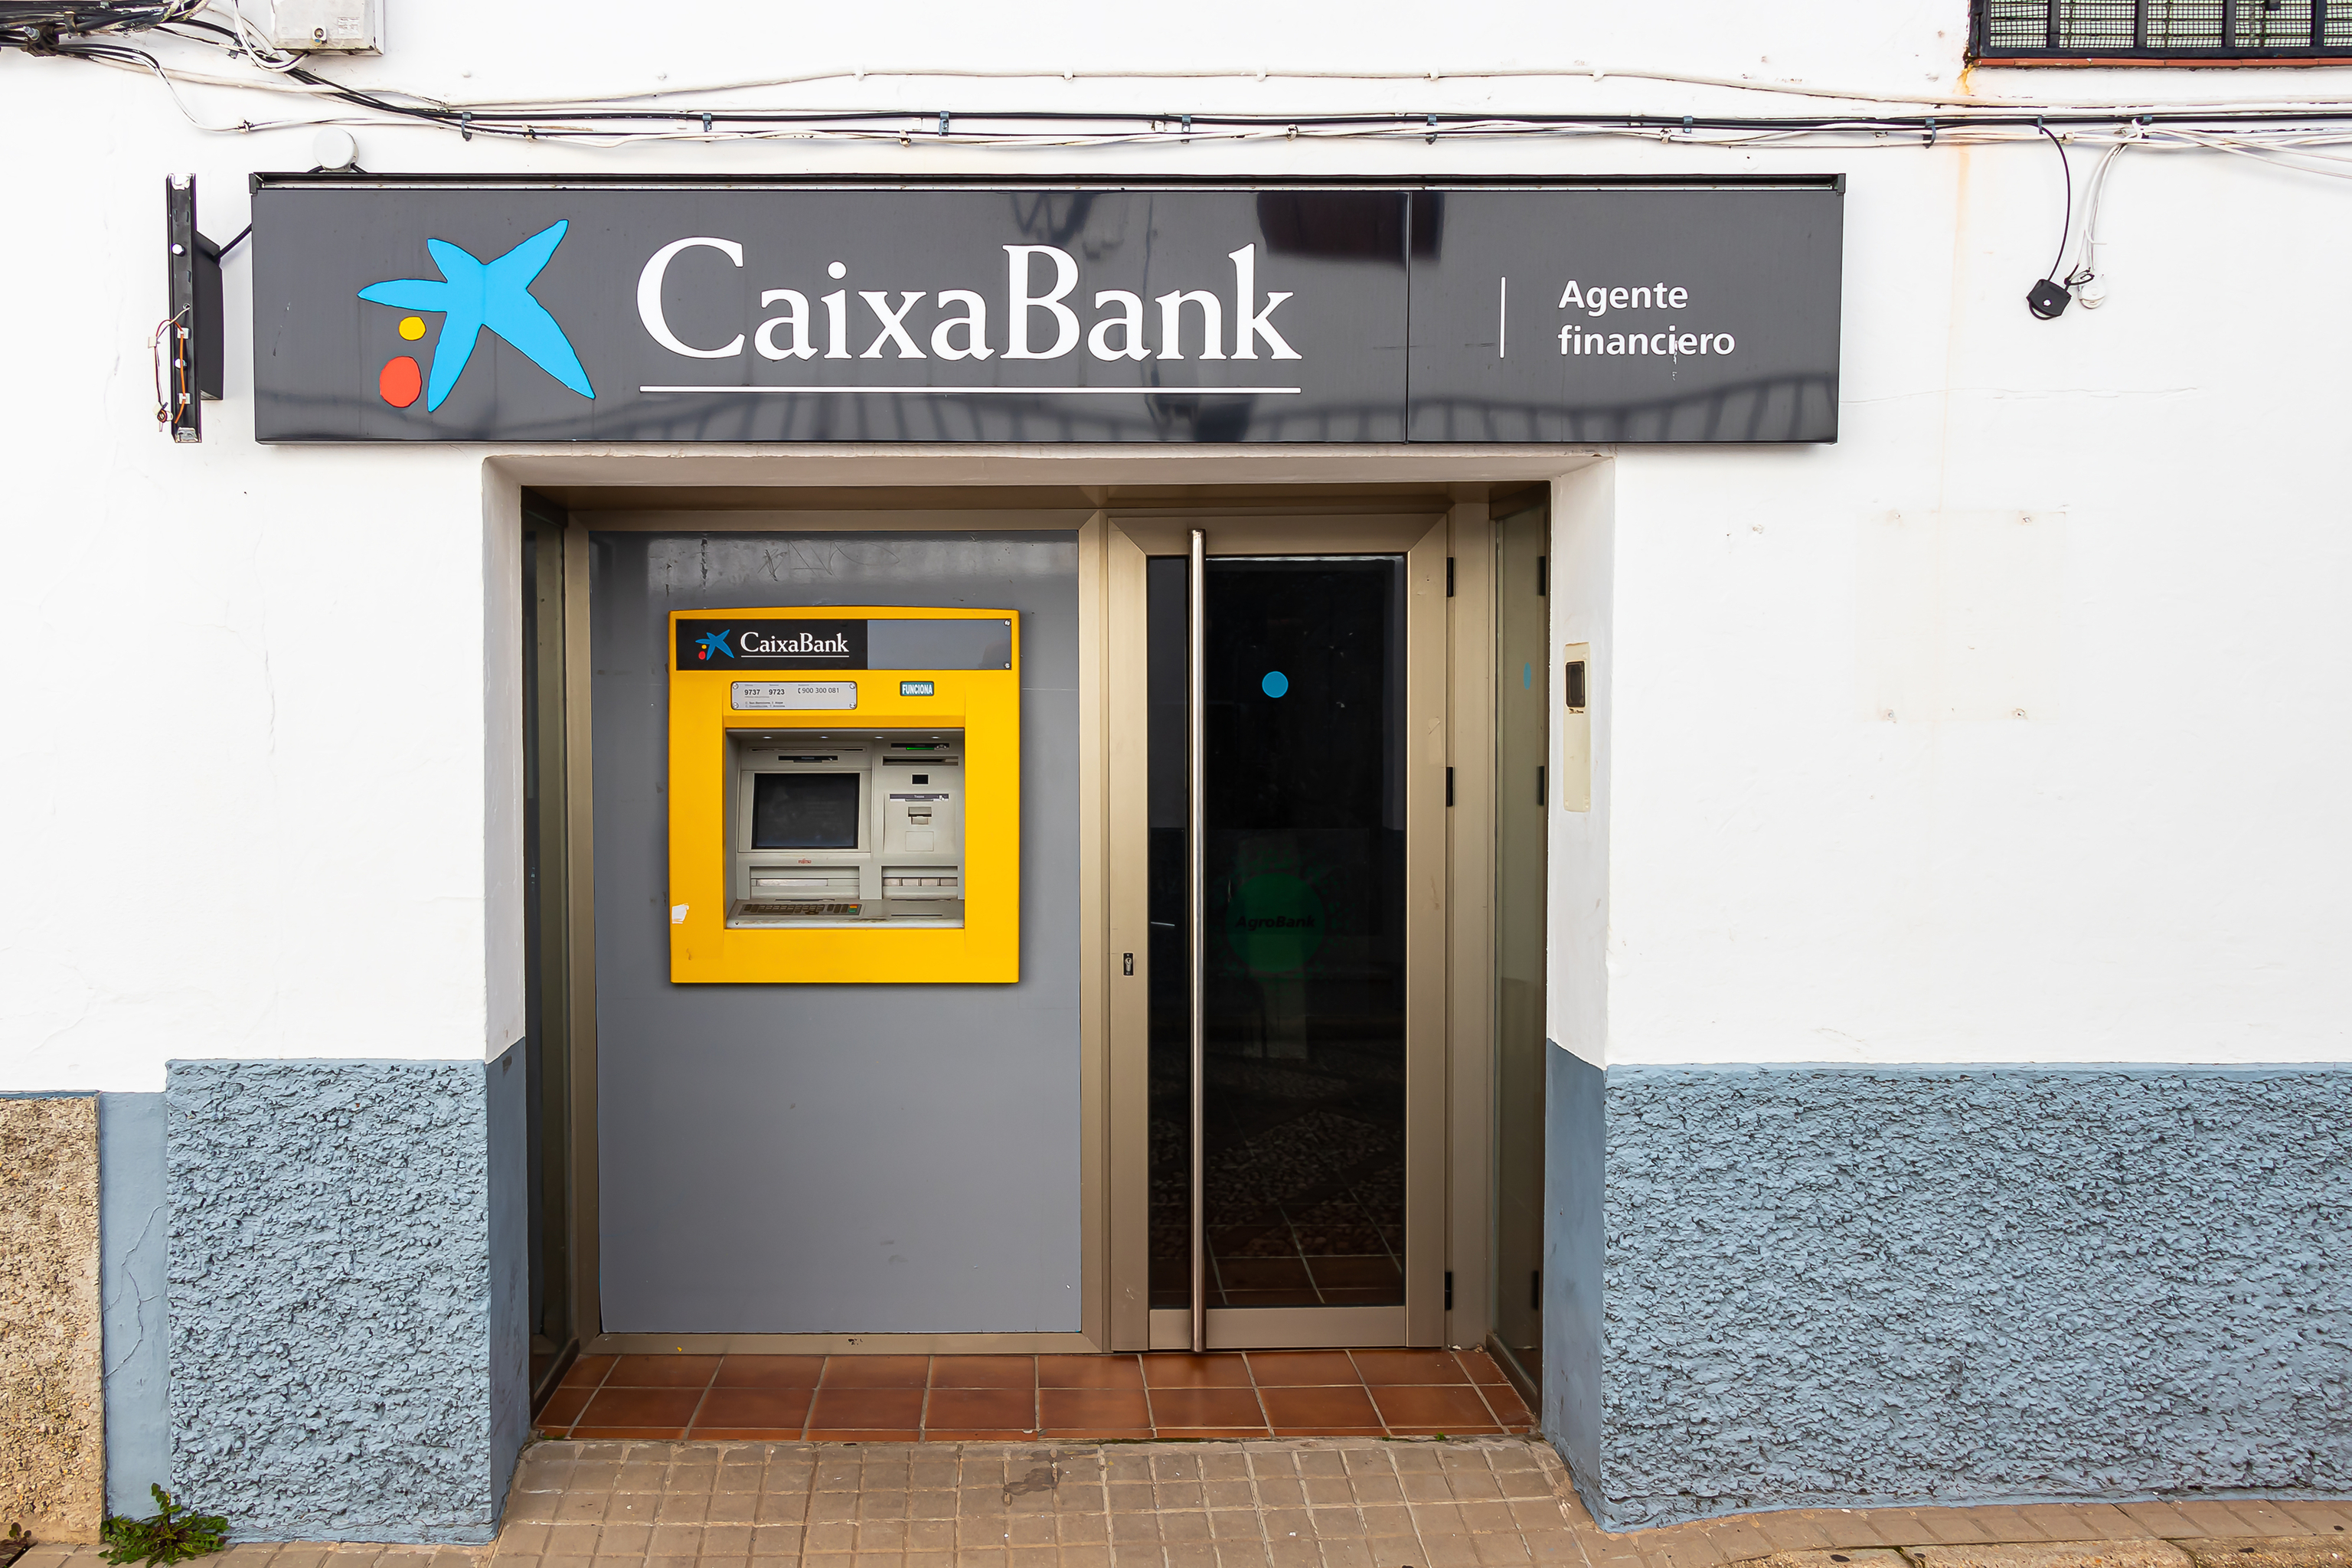 Oficina bancaria en Santa Ana La Real, en Huelva.